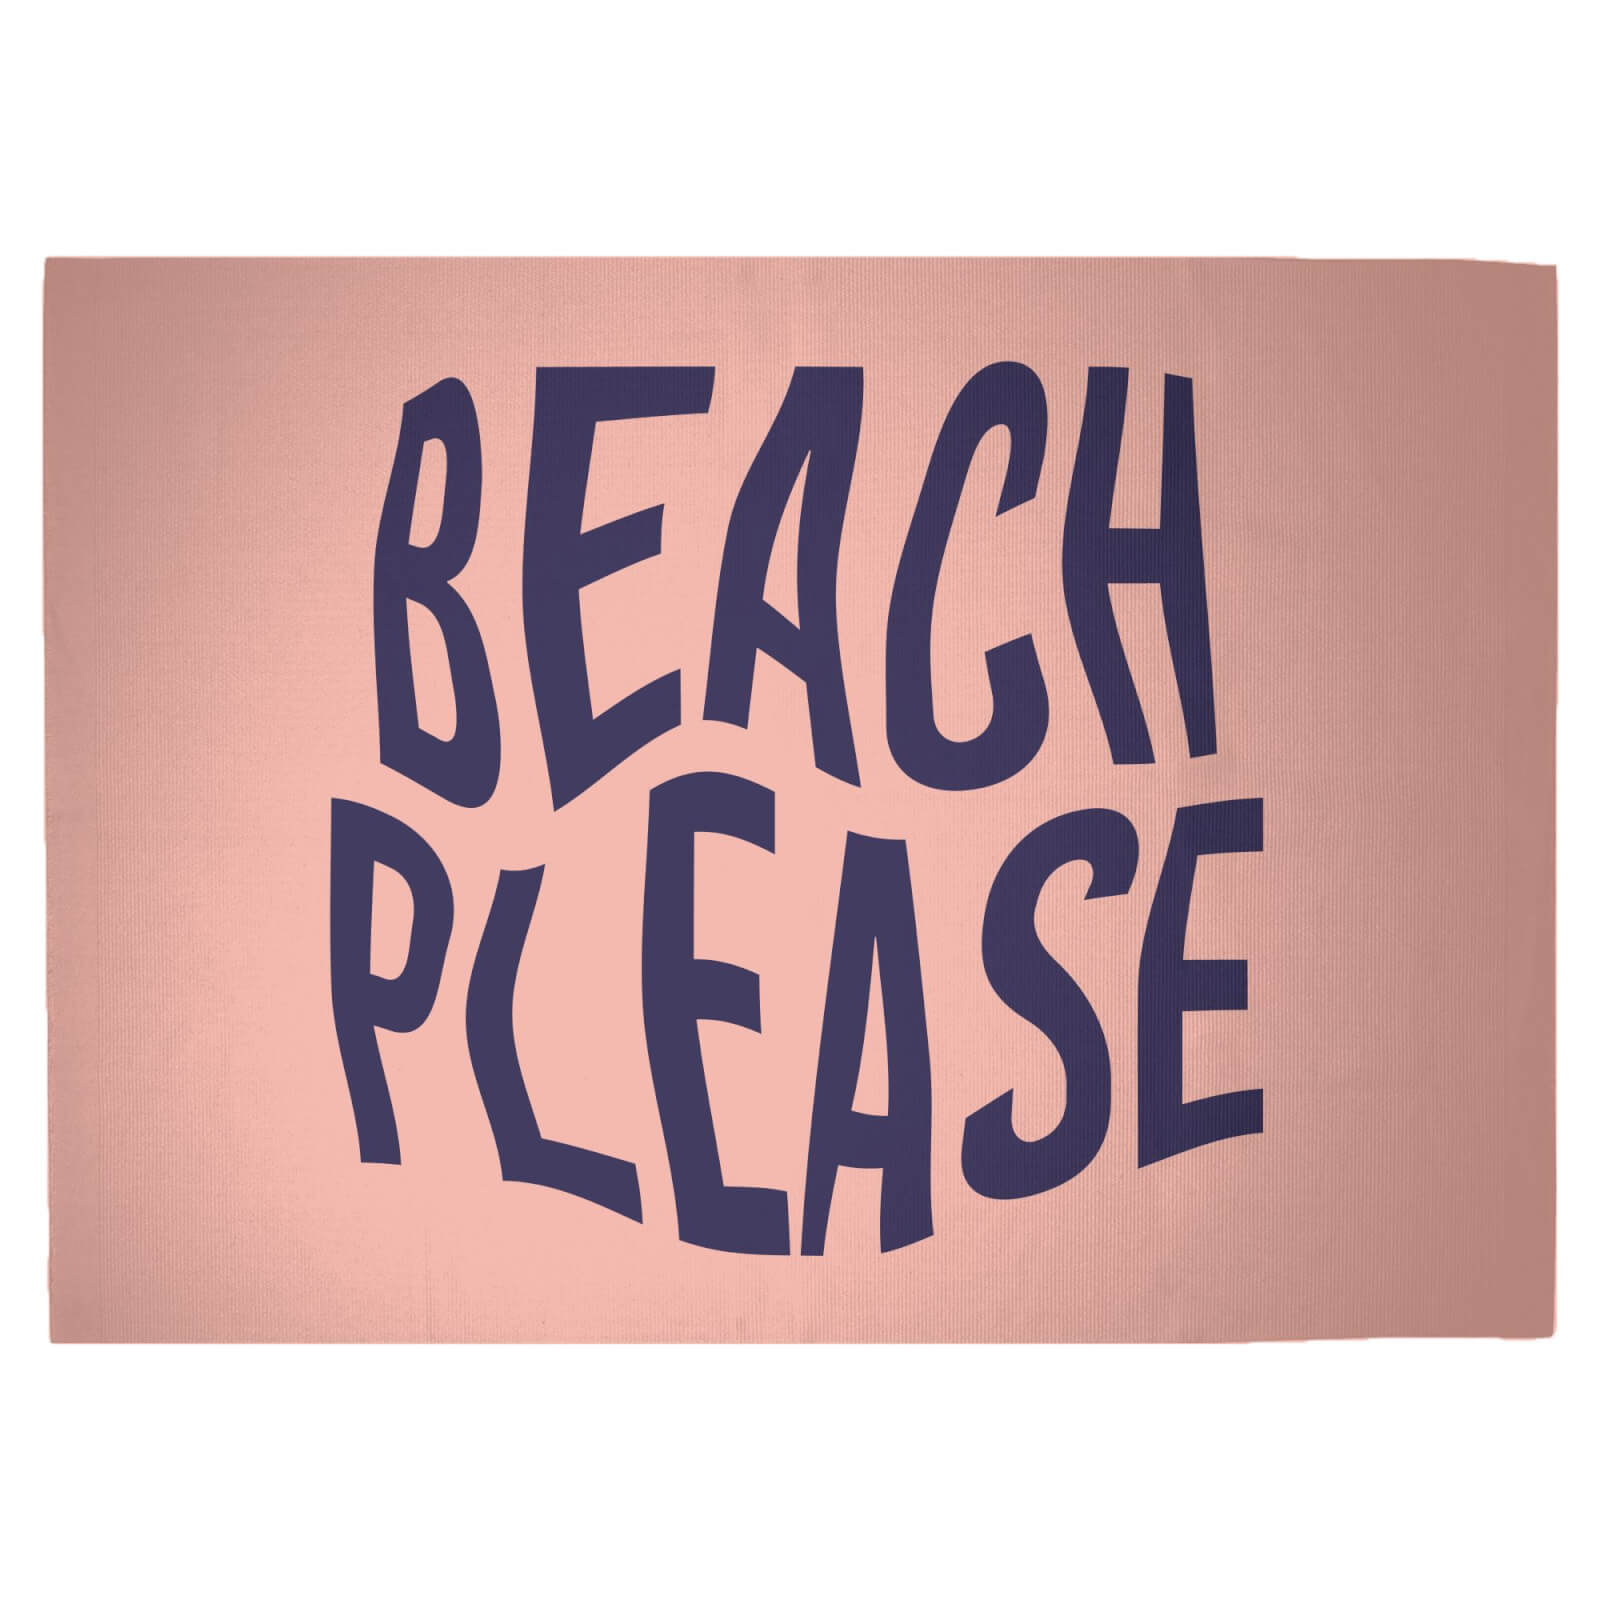 Beach Please Woven Rug - Large